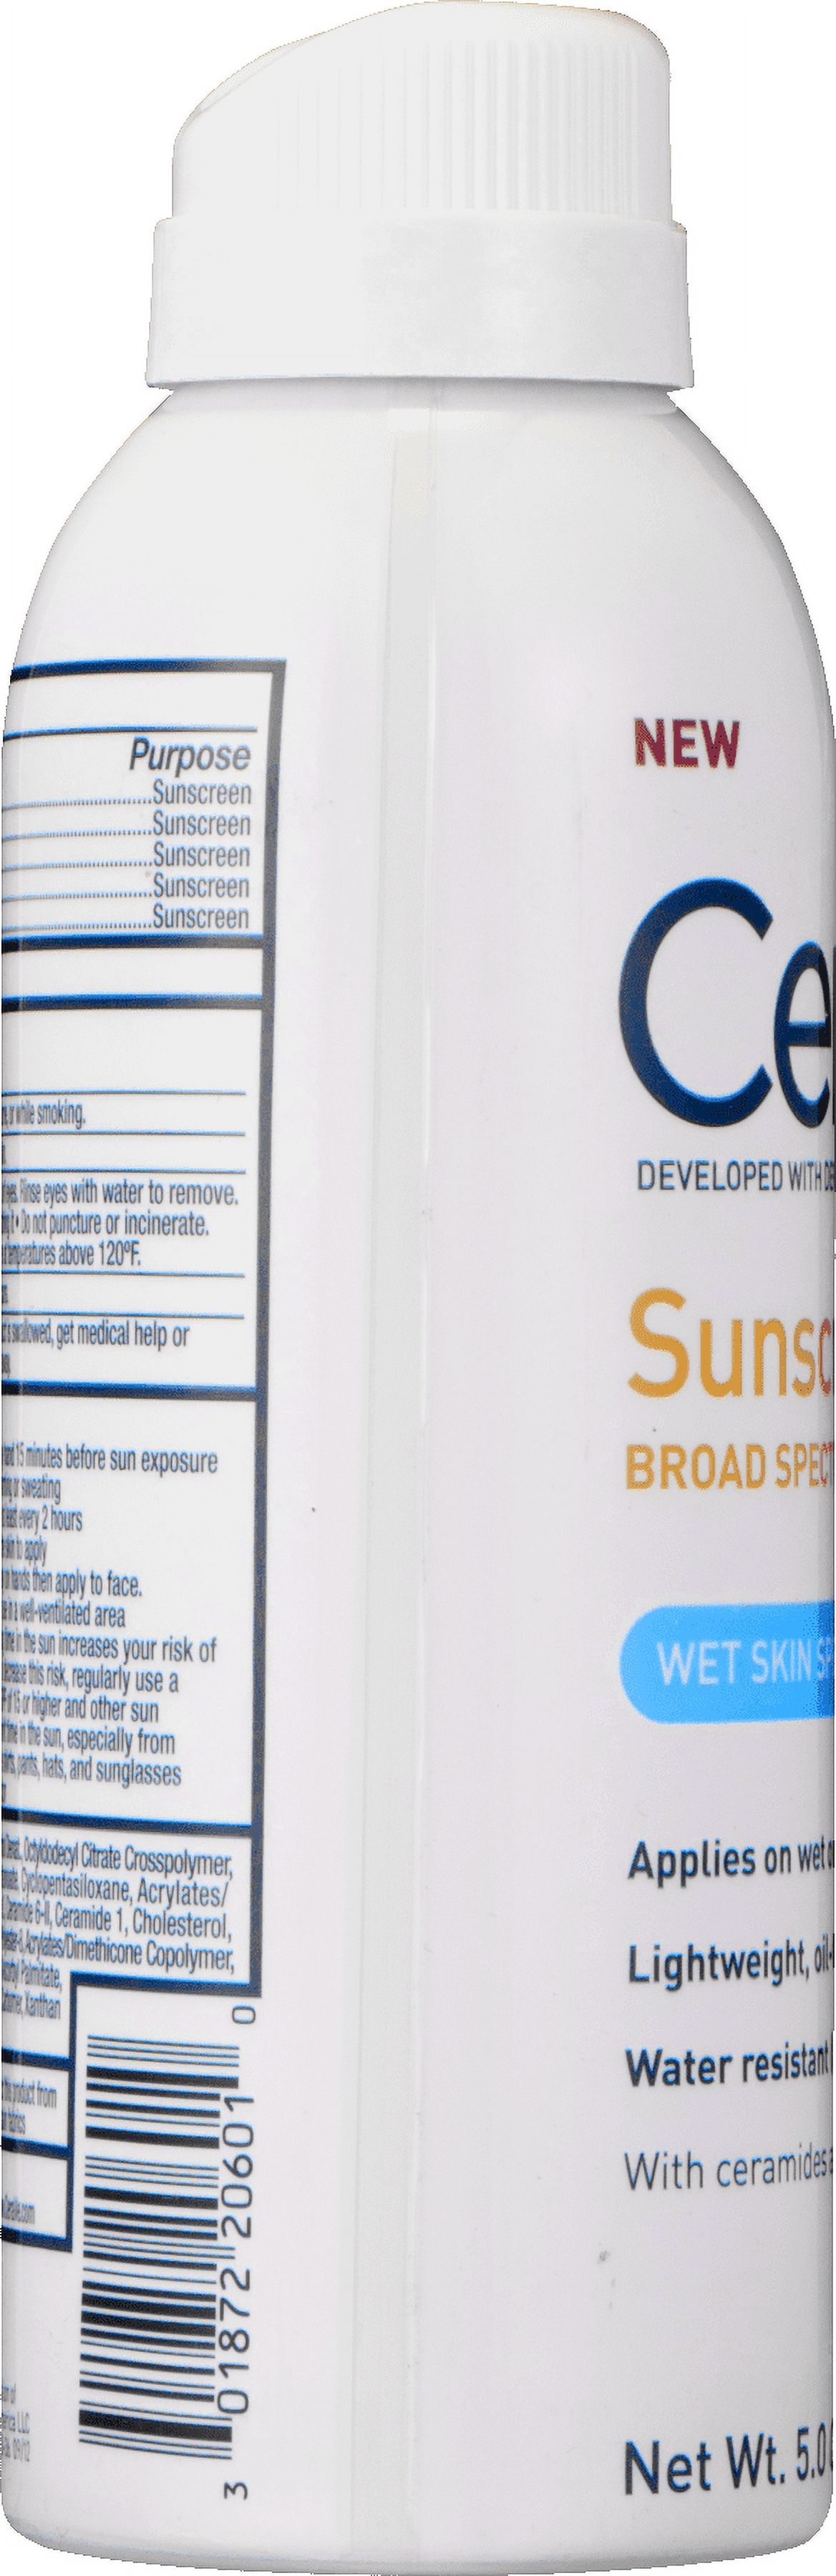 CeraVe Sunscreen Wet Skin Spray, SPF 50, 5 Oz - image 5 of 8